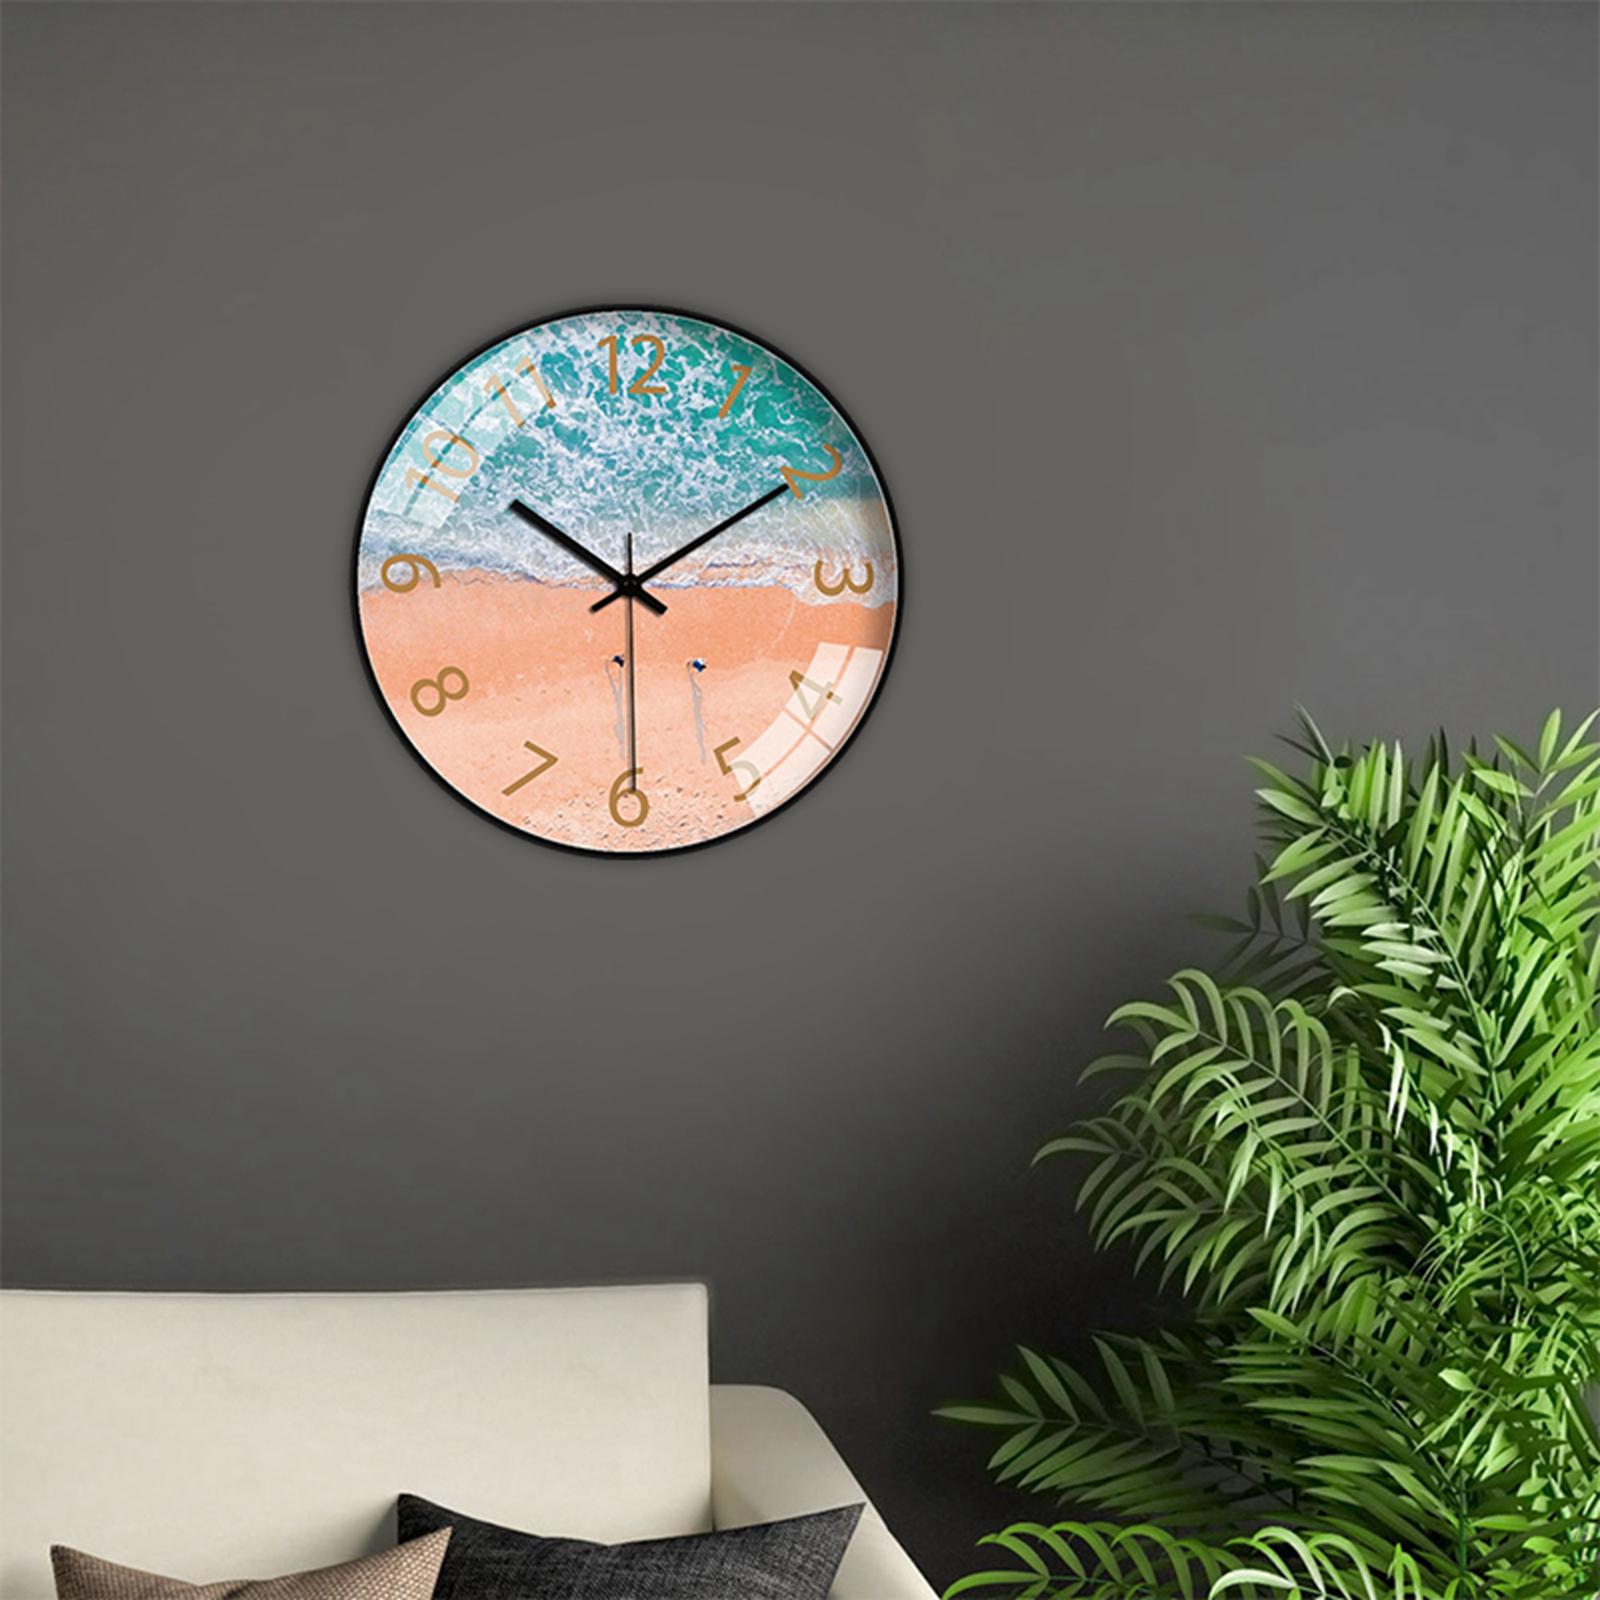 12" Wall Clock Arabic Numerals Clocks for Home Office Decor Black pointer